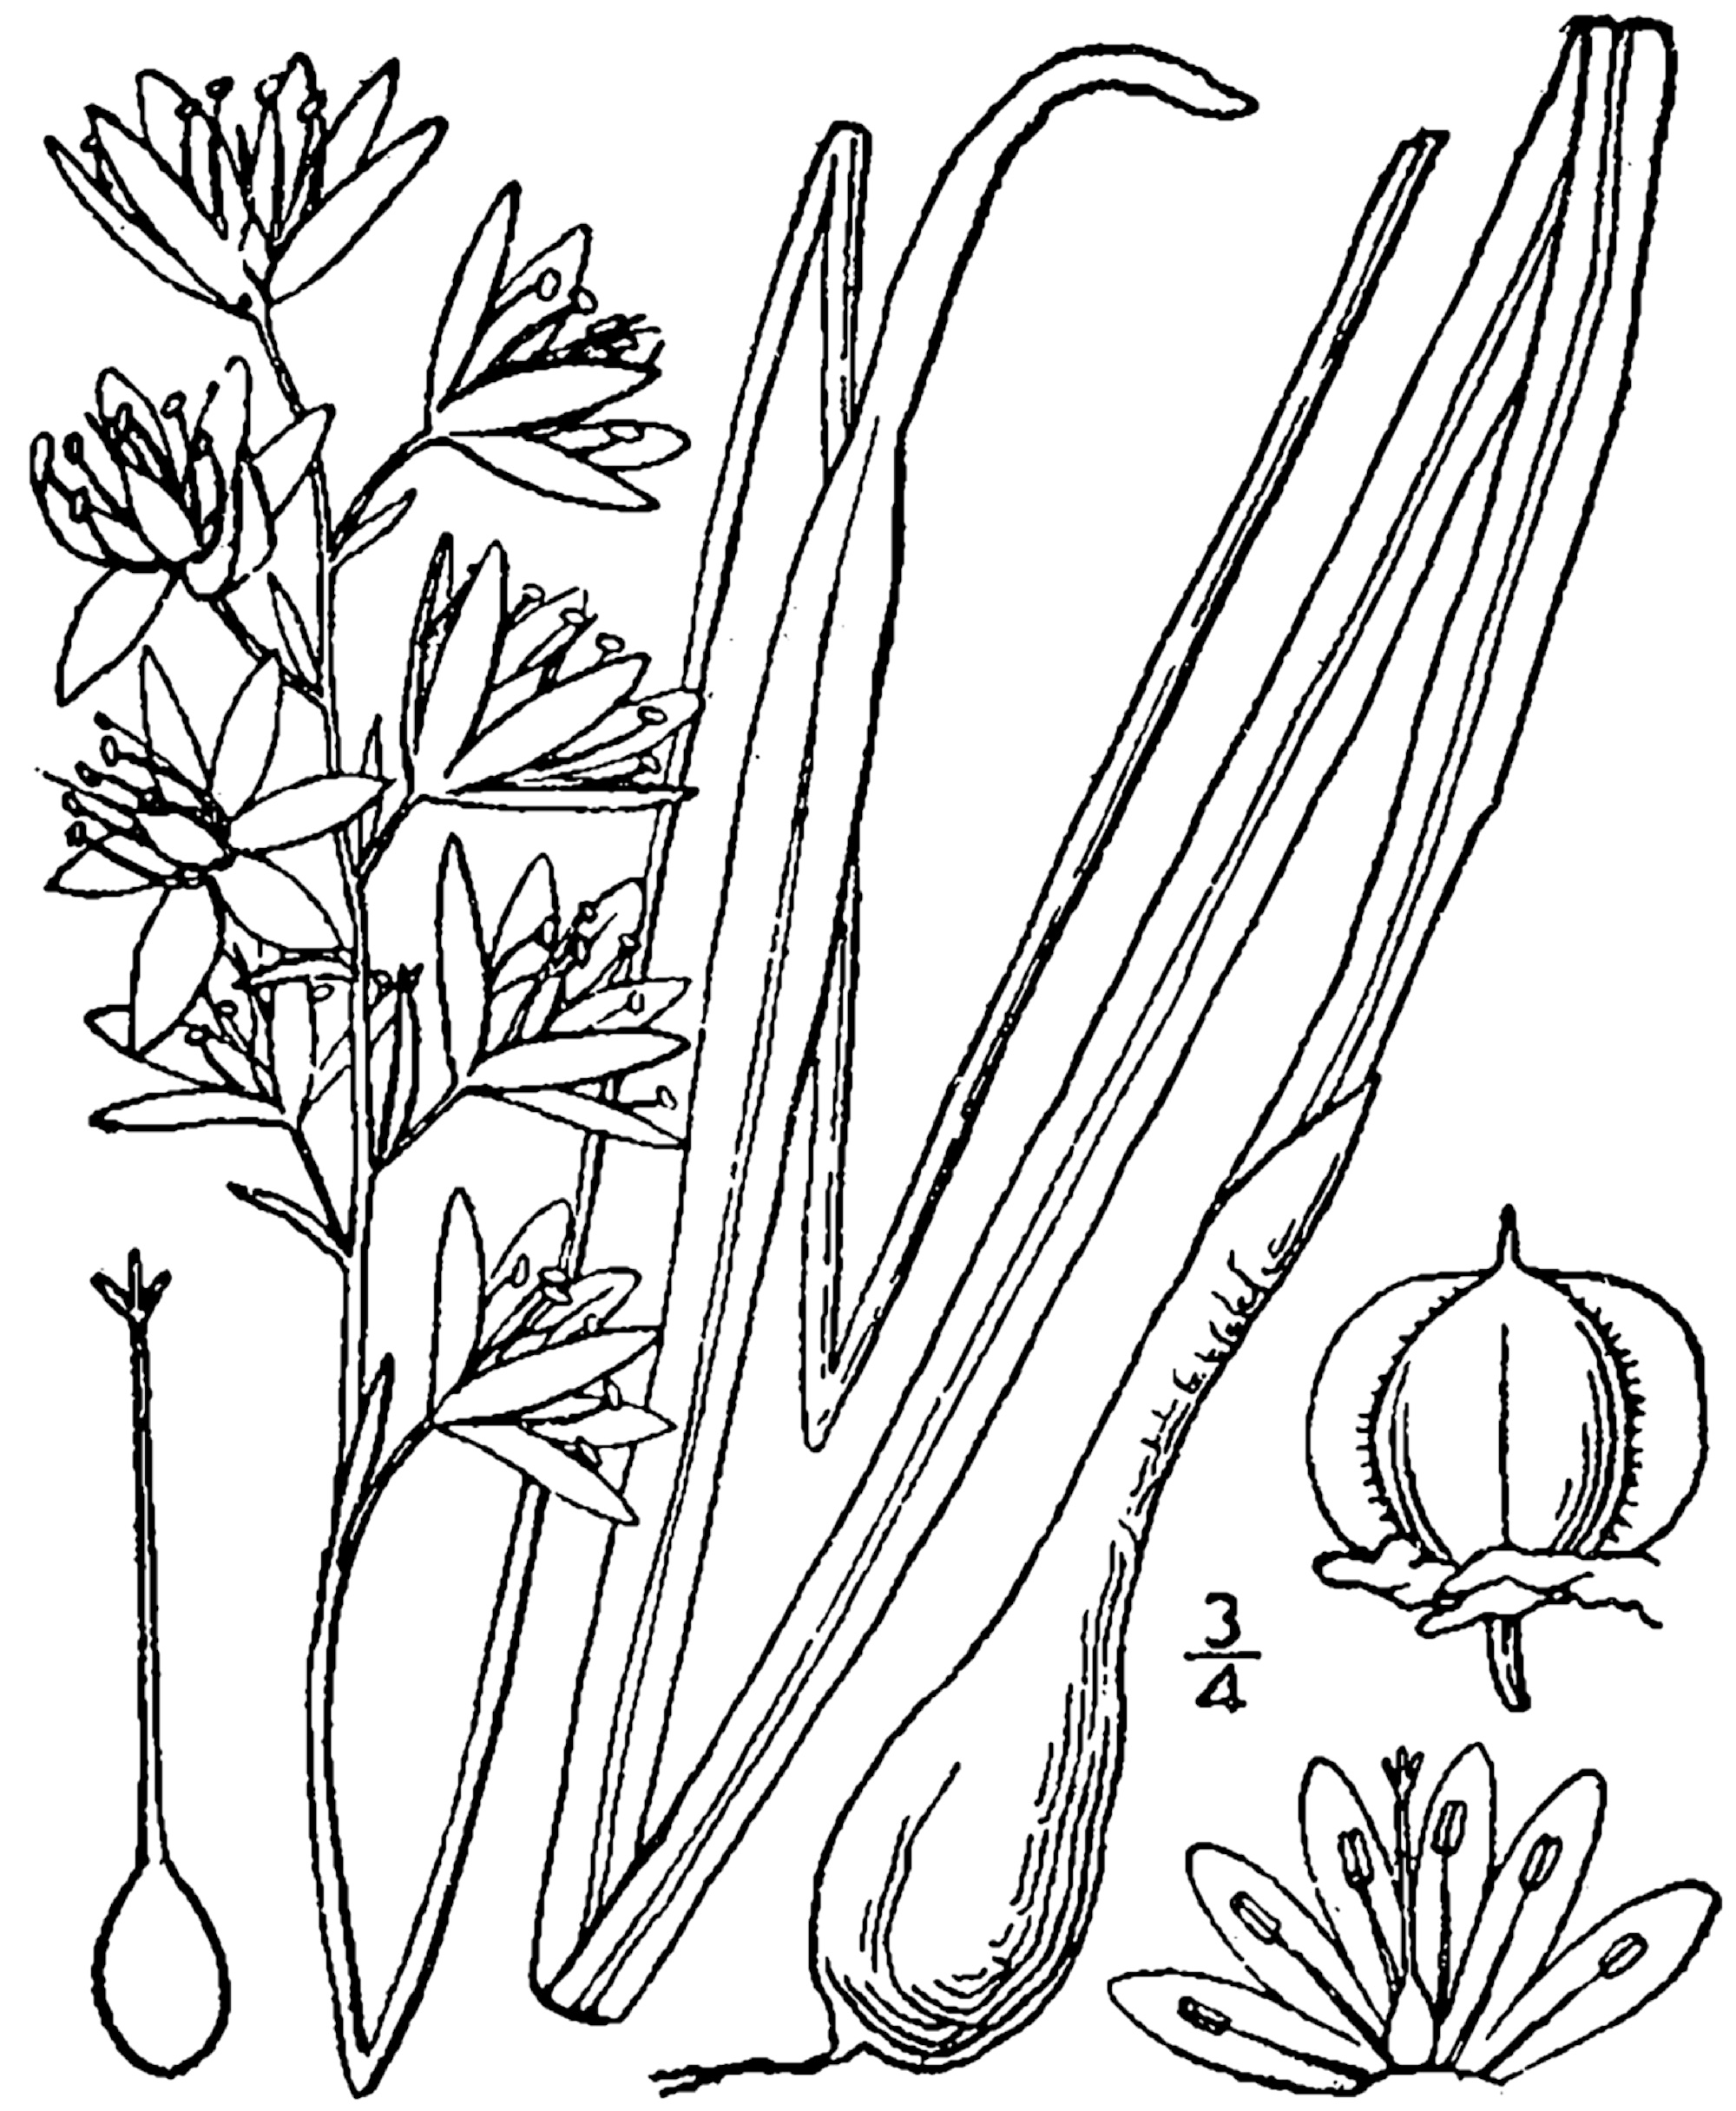 1913 illustration of Wild Hyacinth.